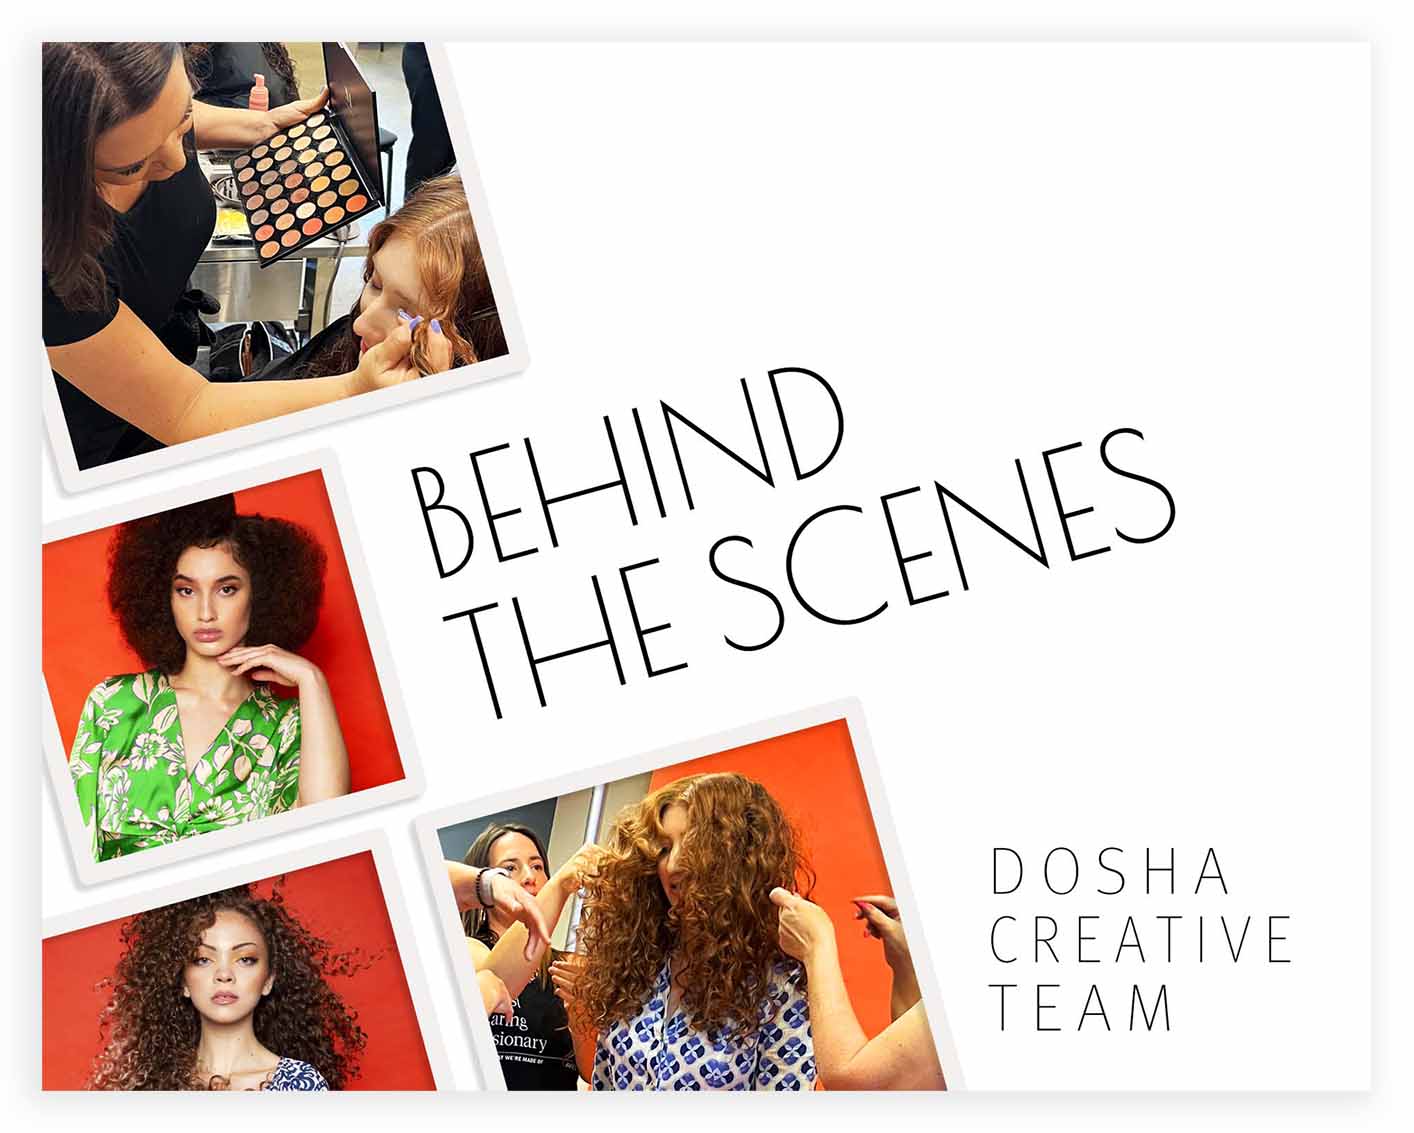 Dosha Creative Team shoot